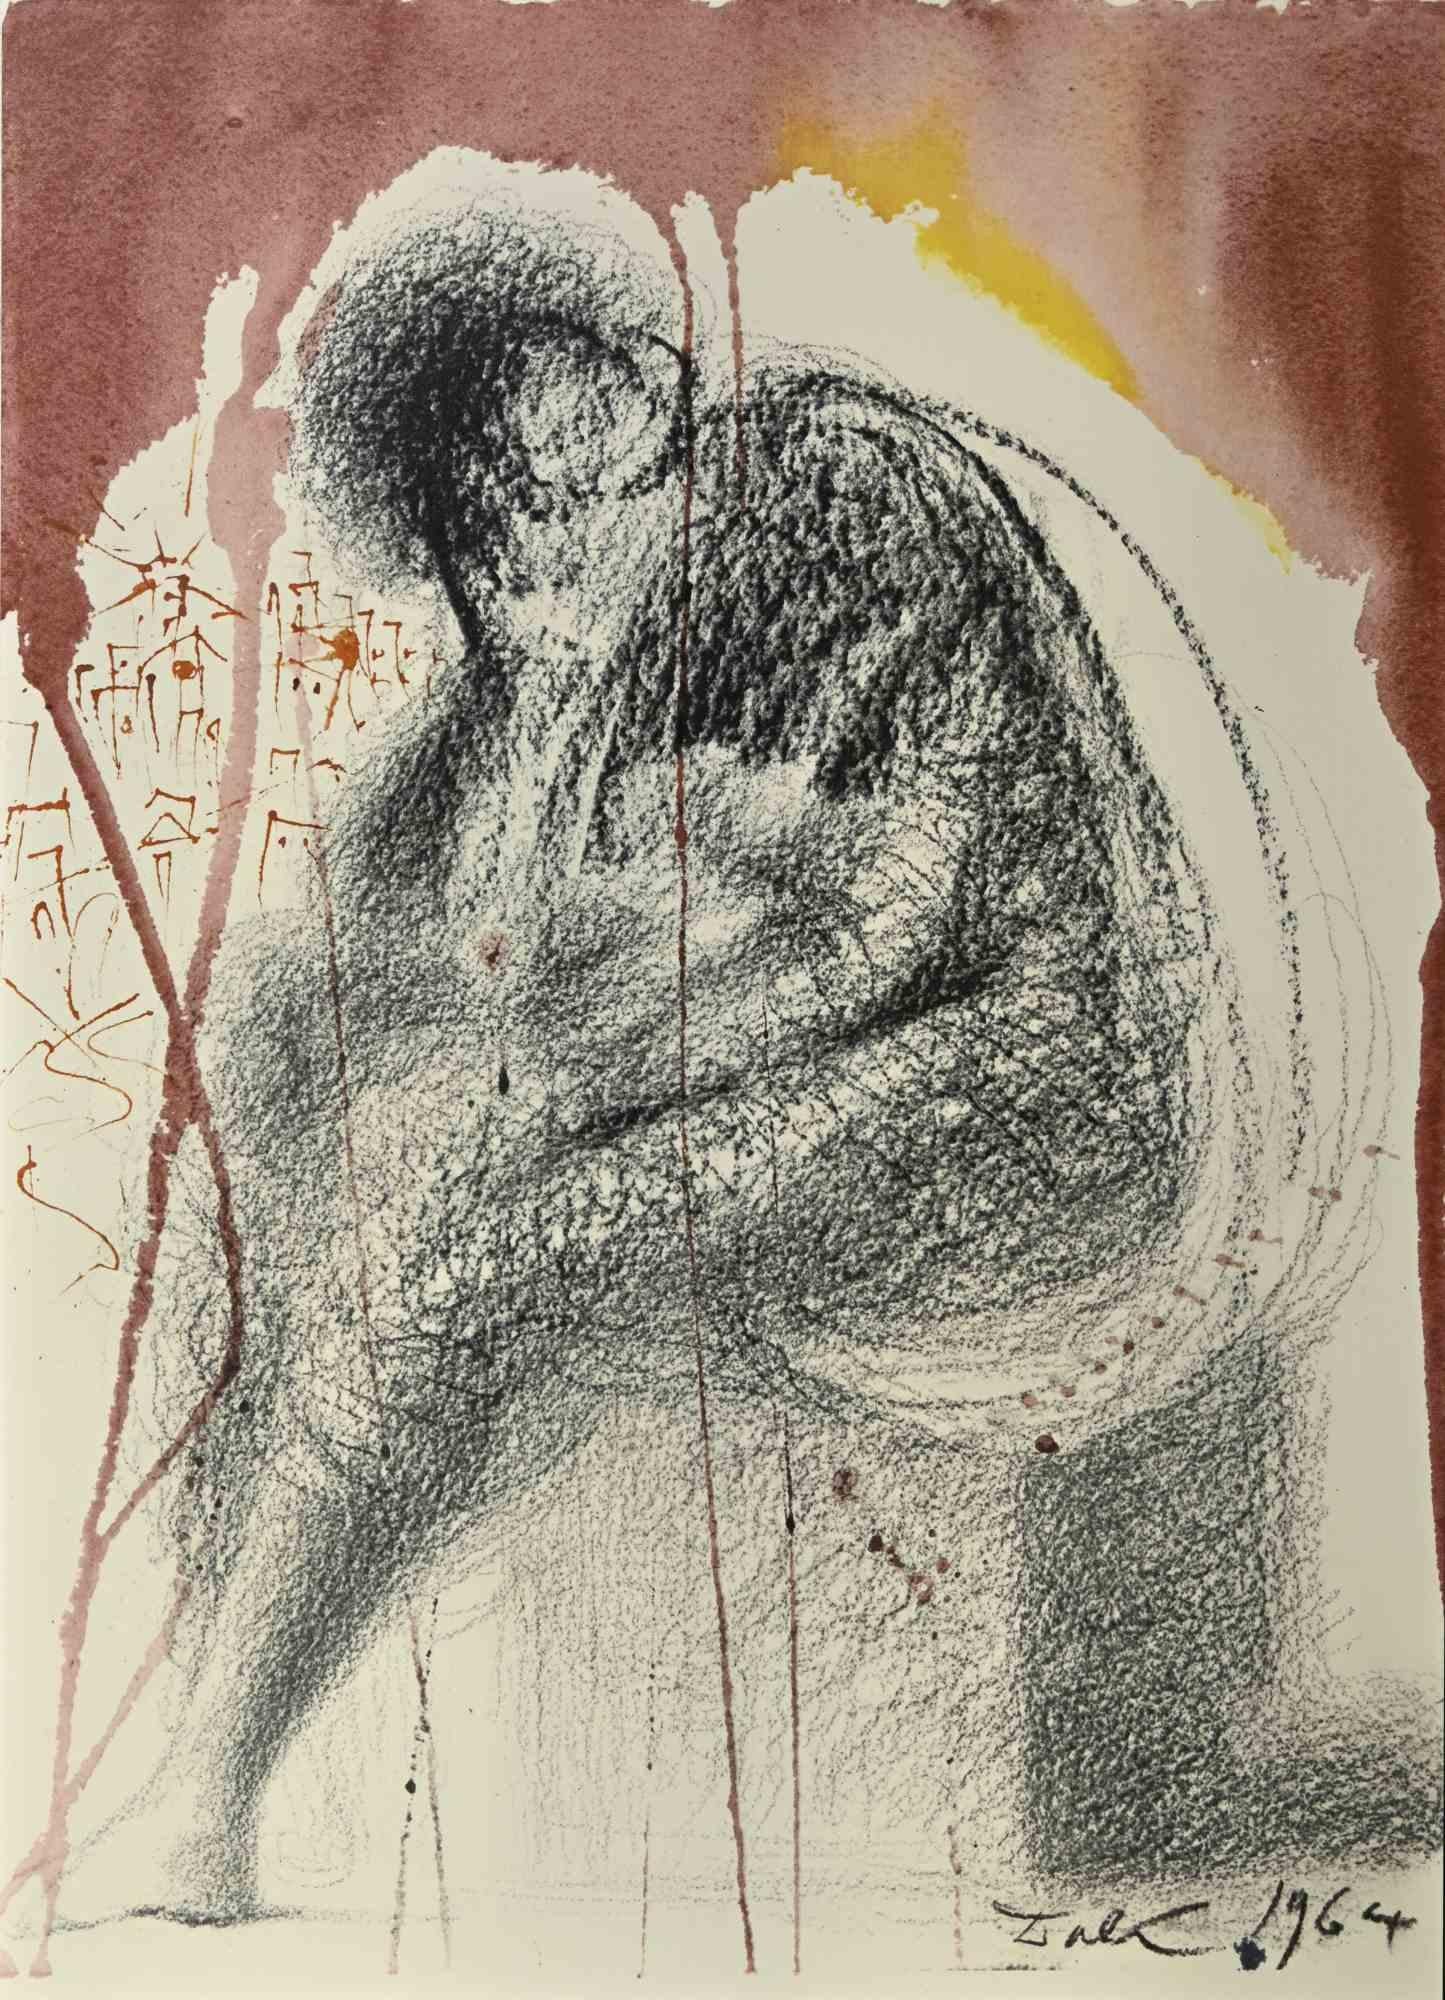 Salvador Dalí Print - Sedet Sola Civitas - Lithograph - 1964